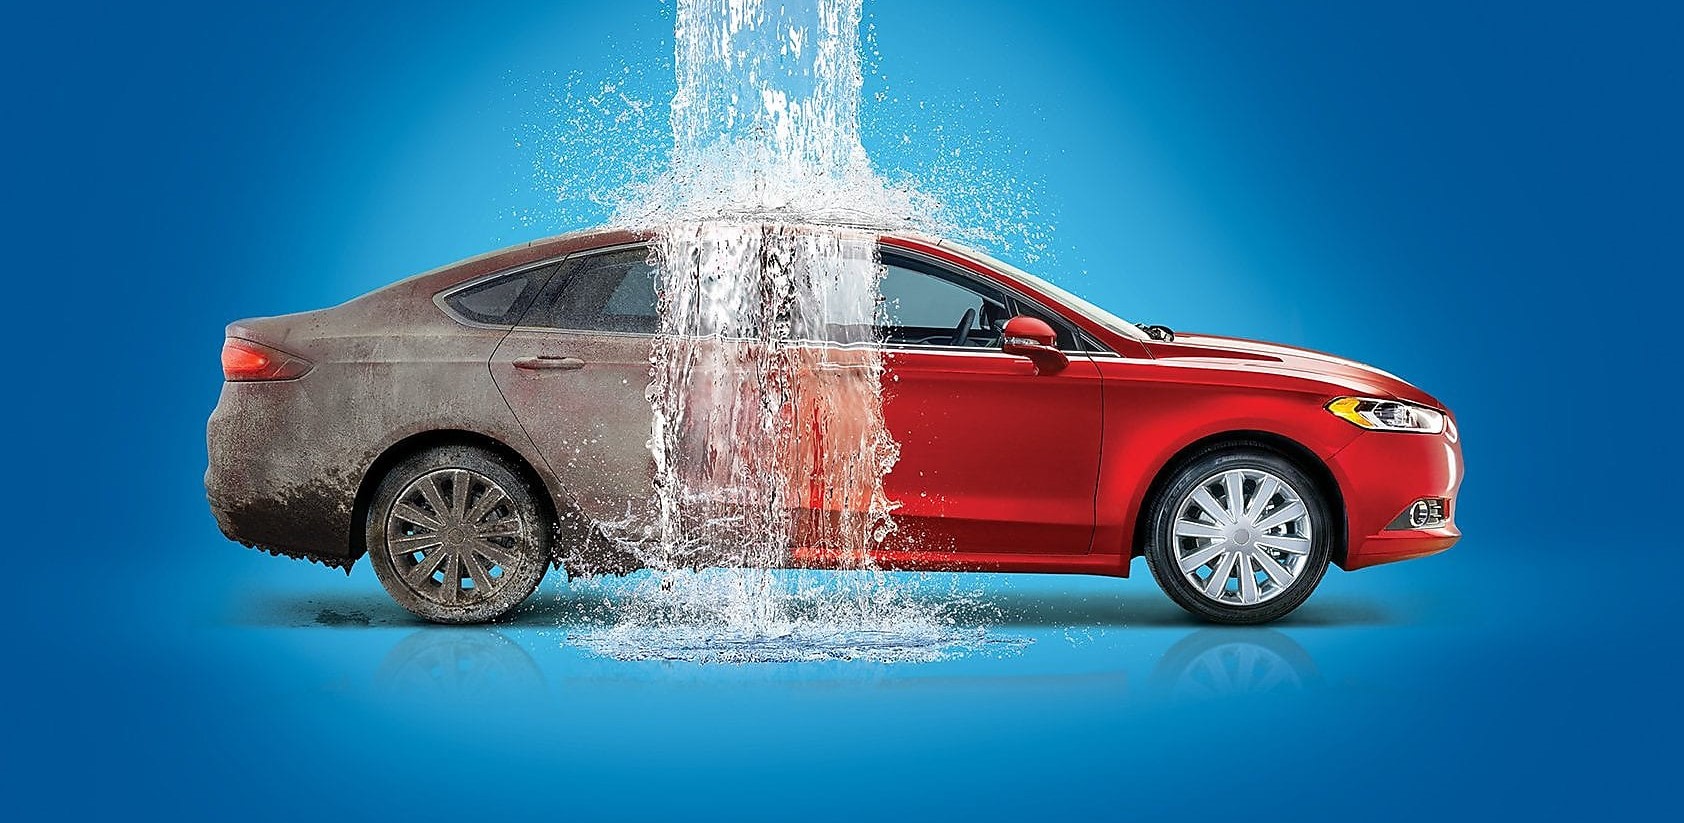 Car Wash Mode On Tesla